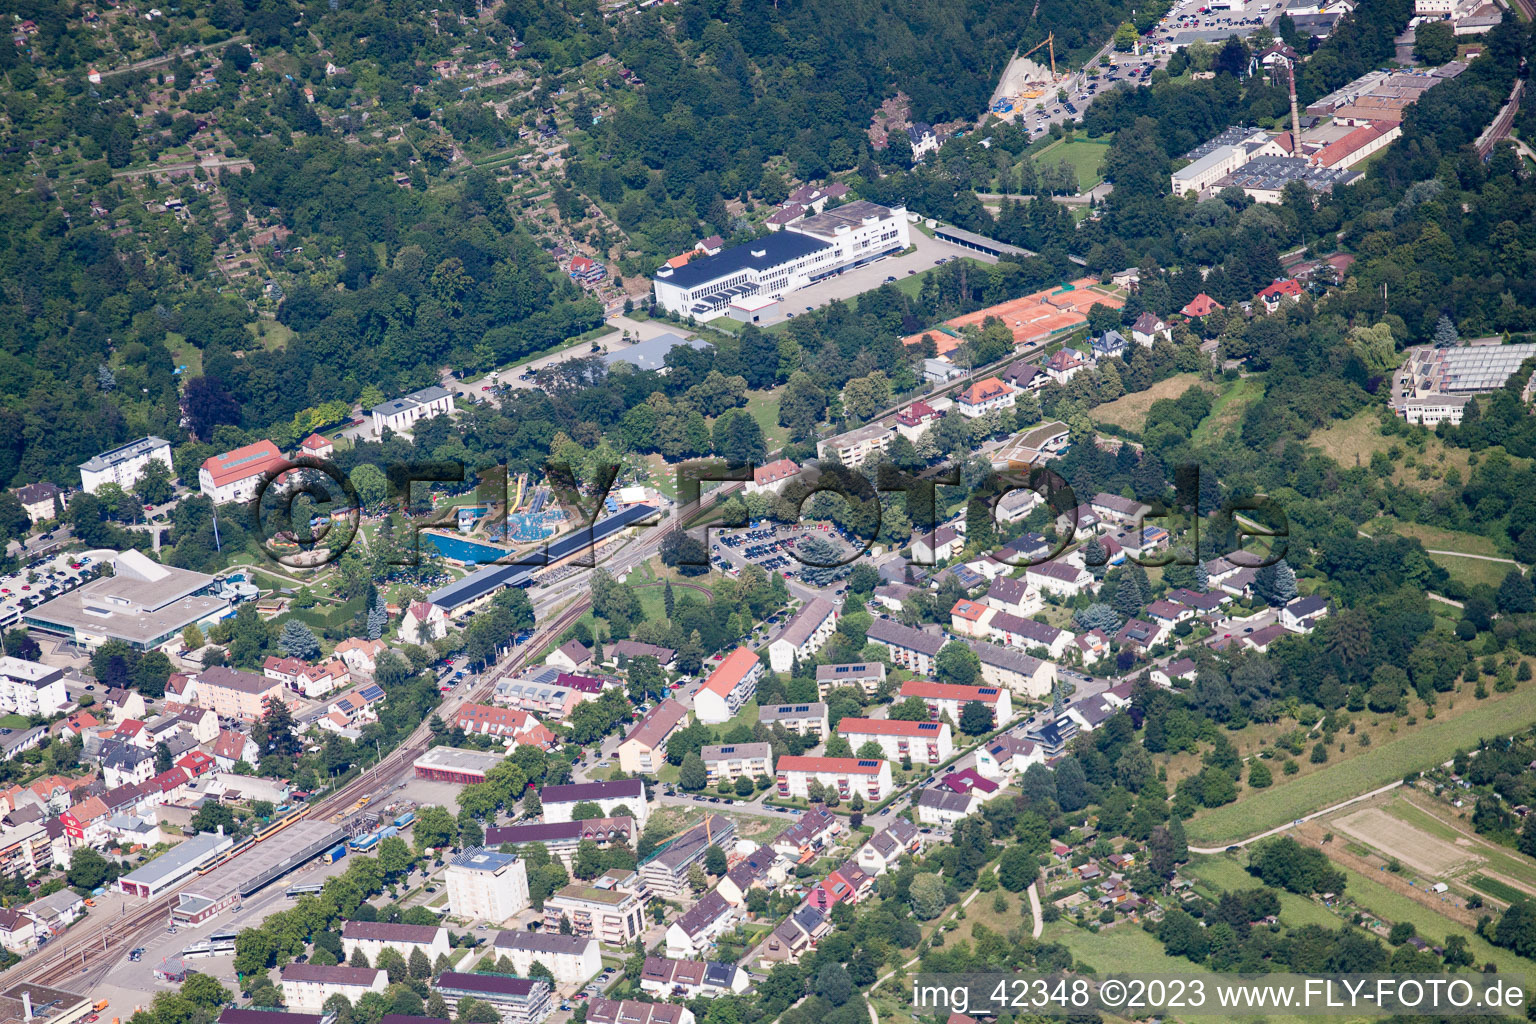 Oblique view of Albgaubad in Ettlingen in the state Baden-Wuerttemberg, Germany